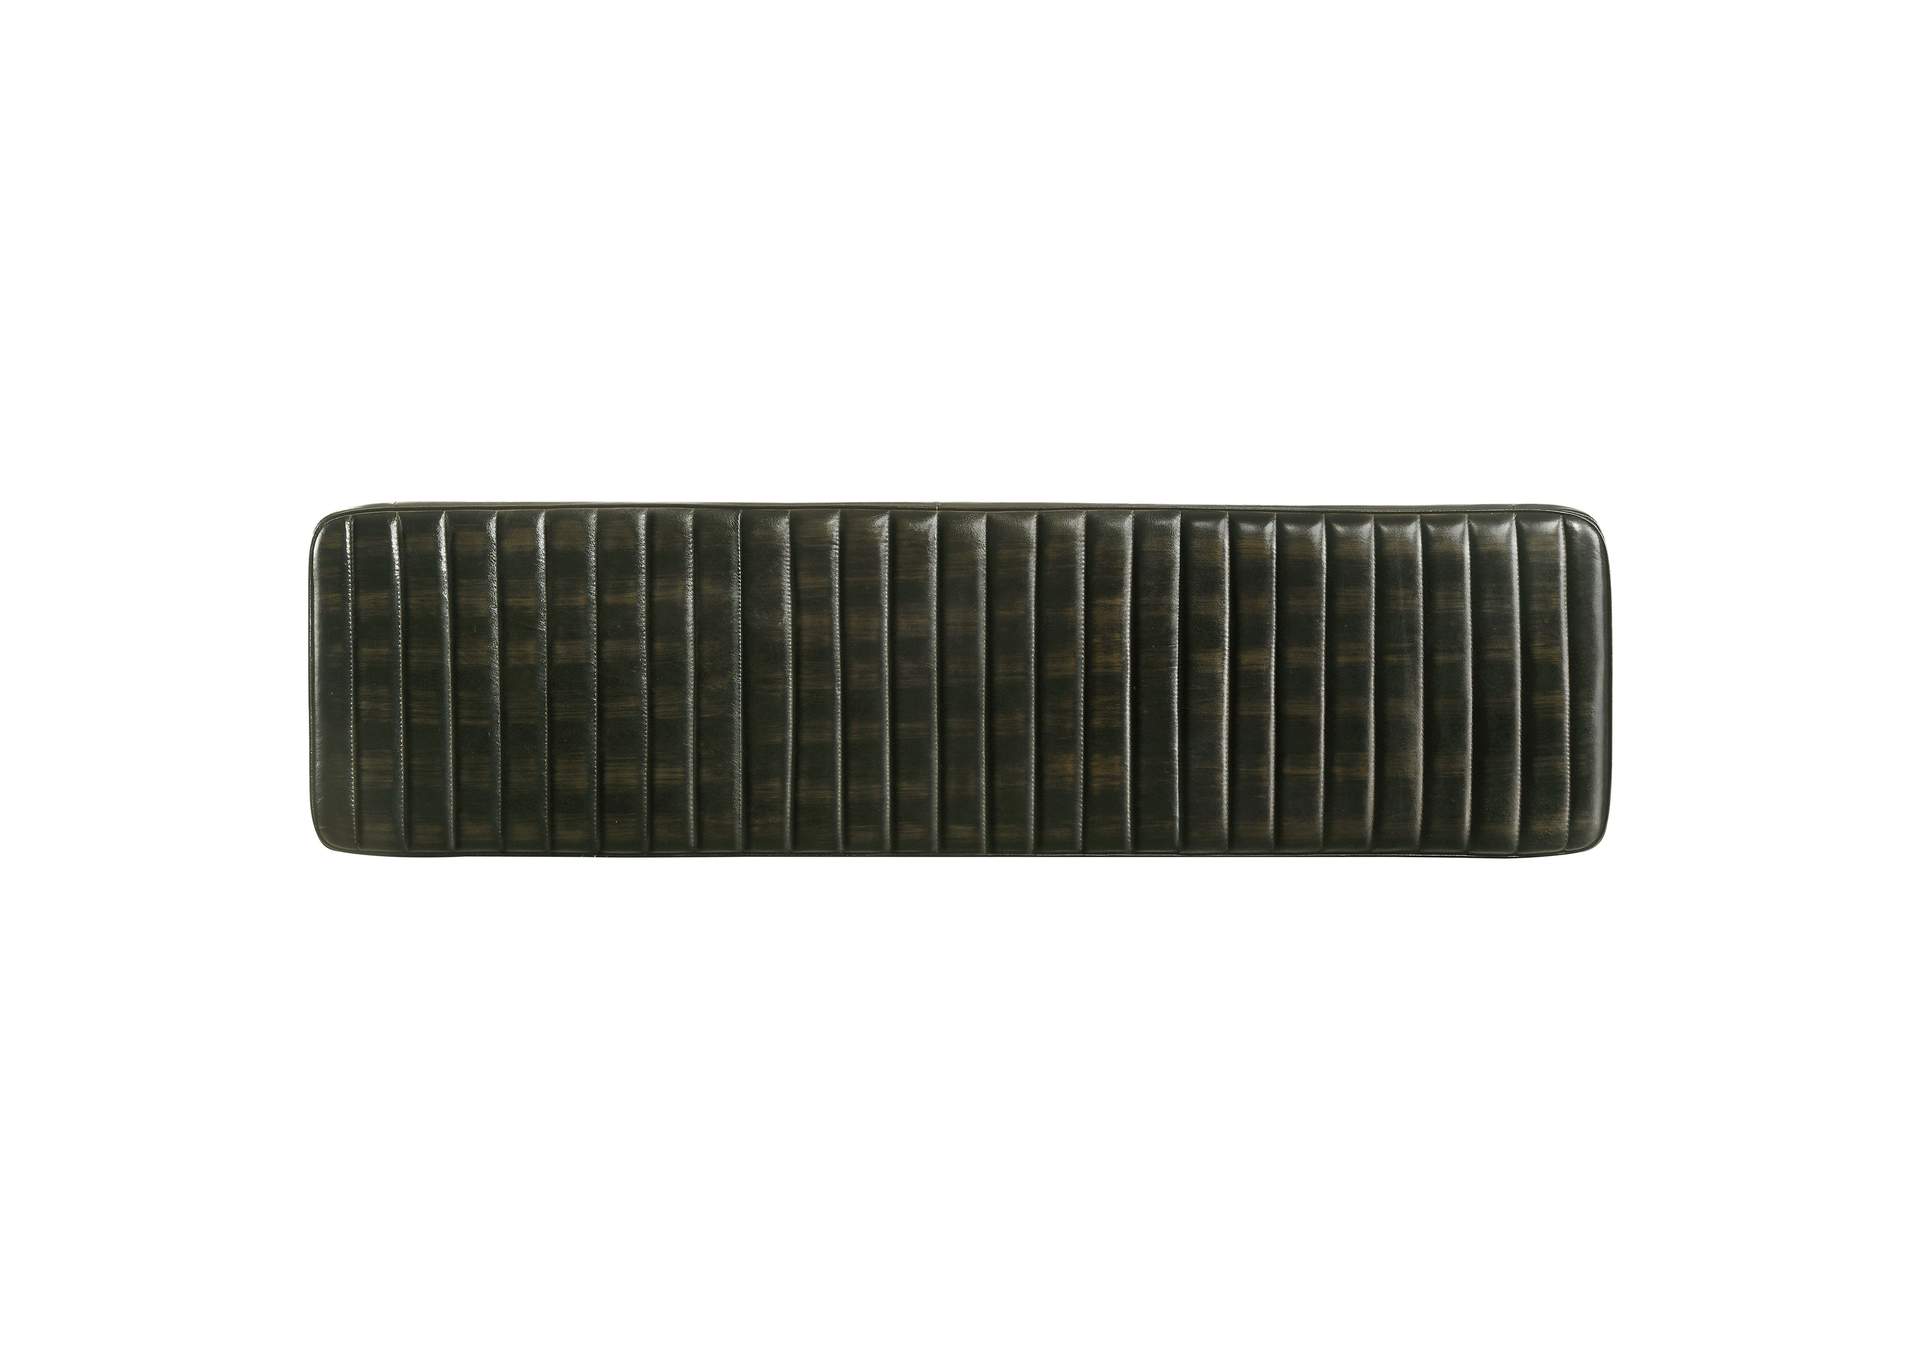 Partridge Cushion Bench Espresso and Black,Coaster Furniture